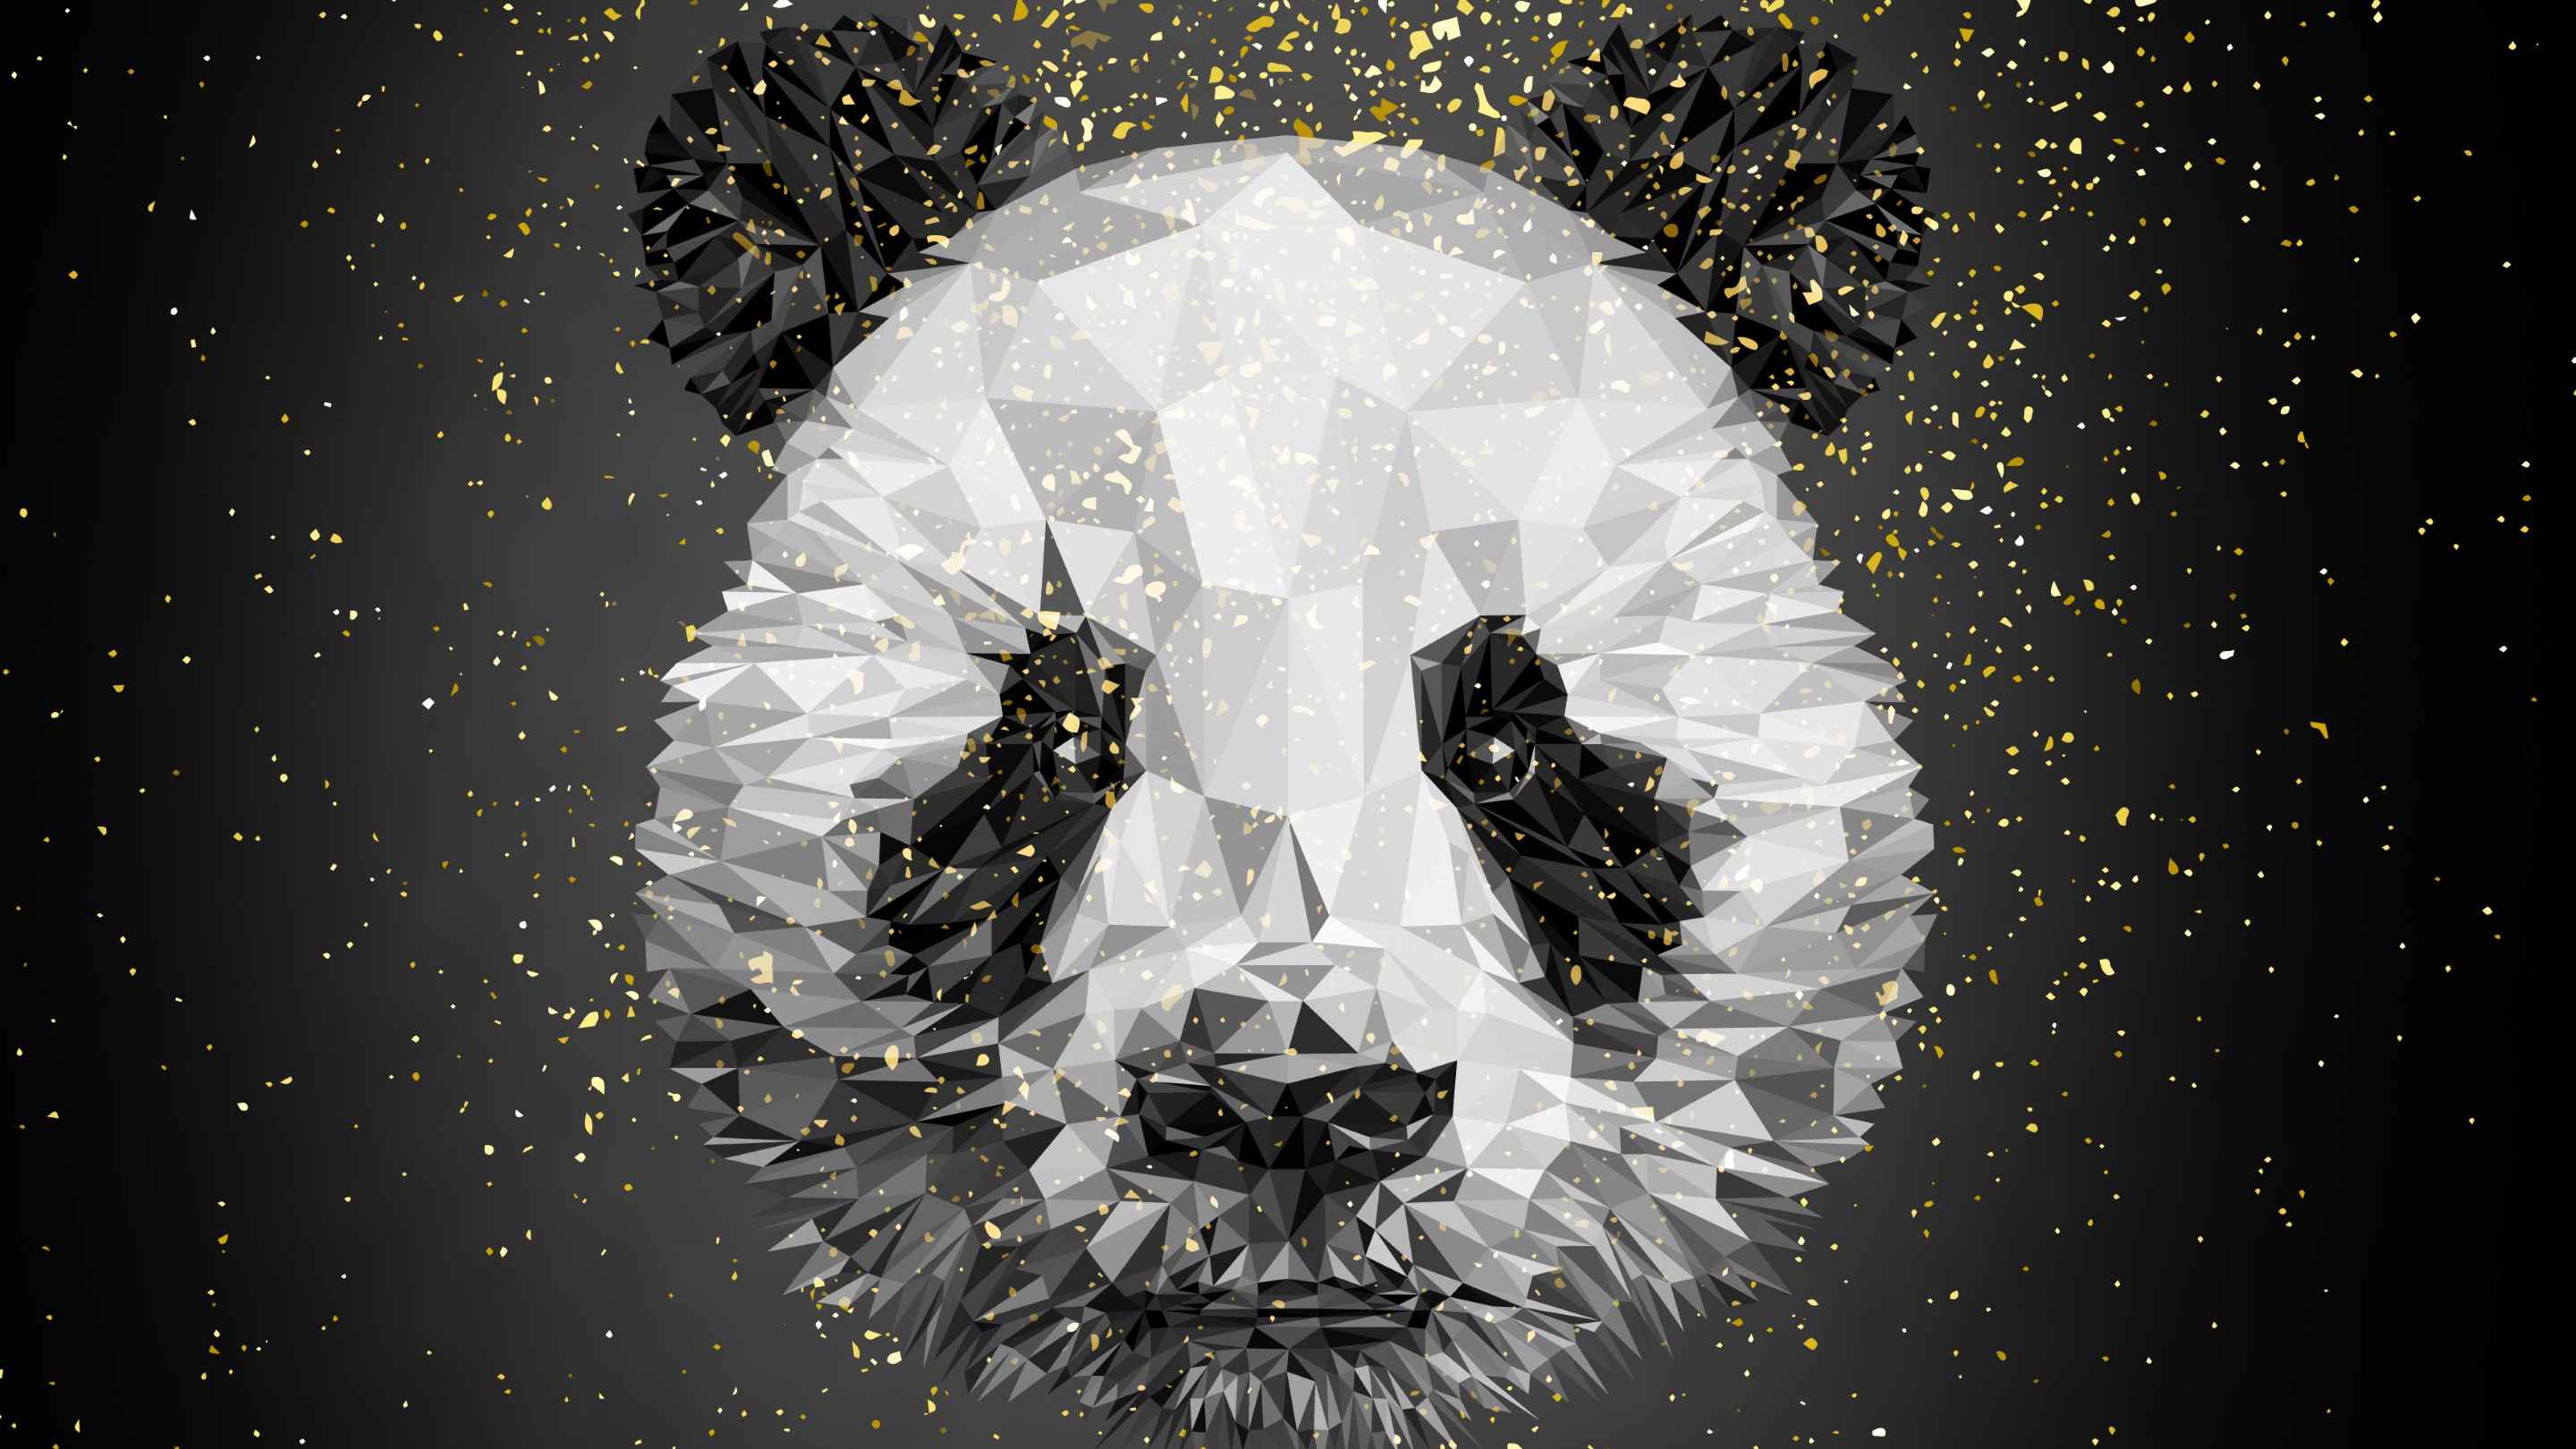 Panda bear illustration wallpaper 2880x1620